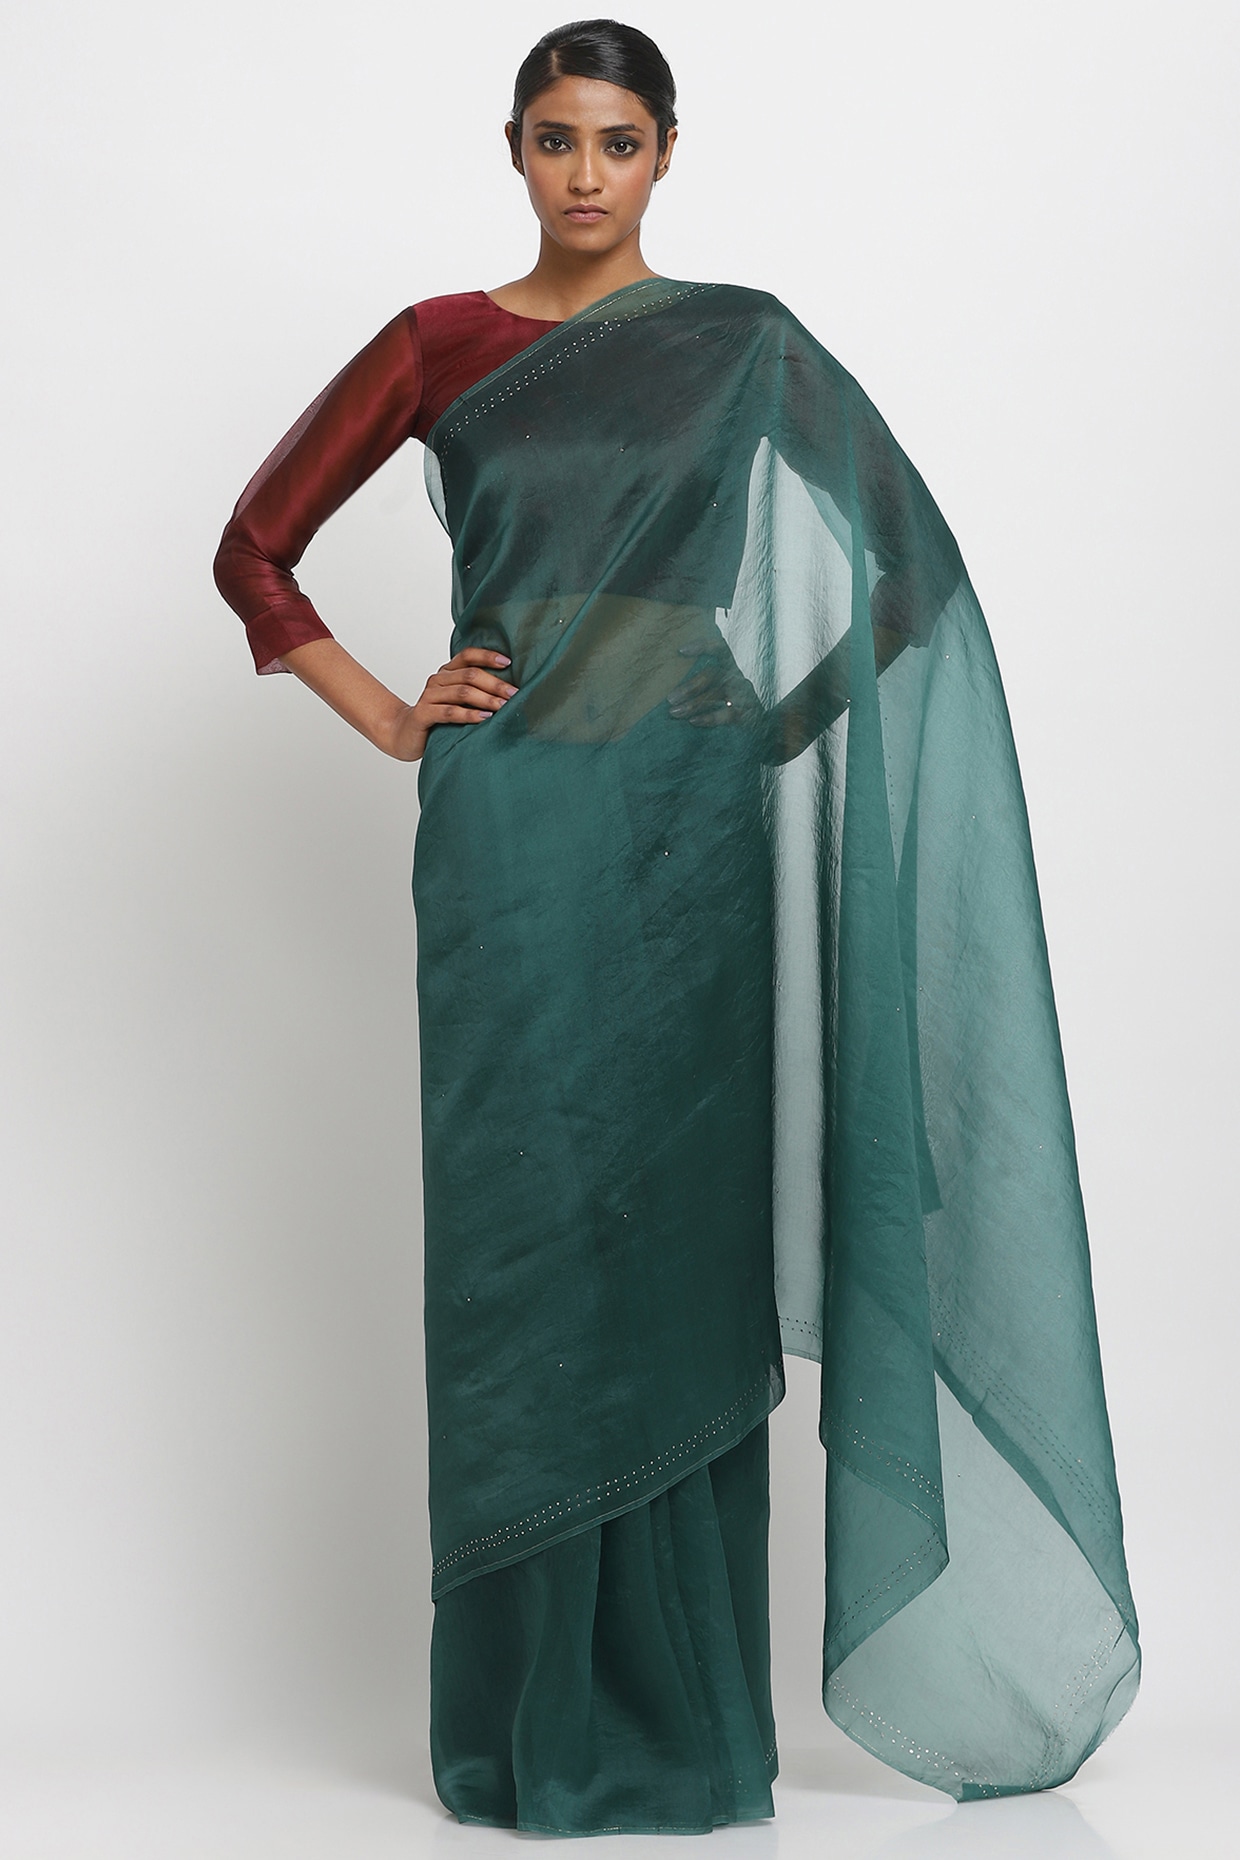 Net Designer Saree In Pista Green Colour - SR4690129